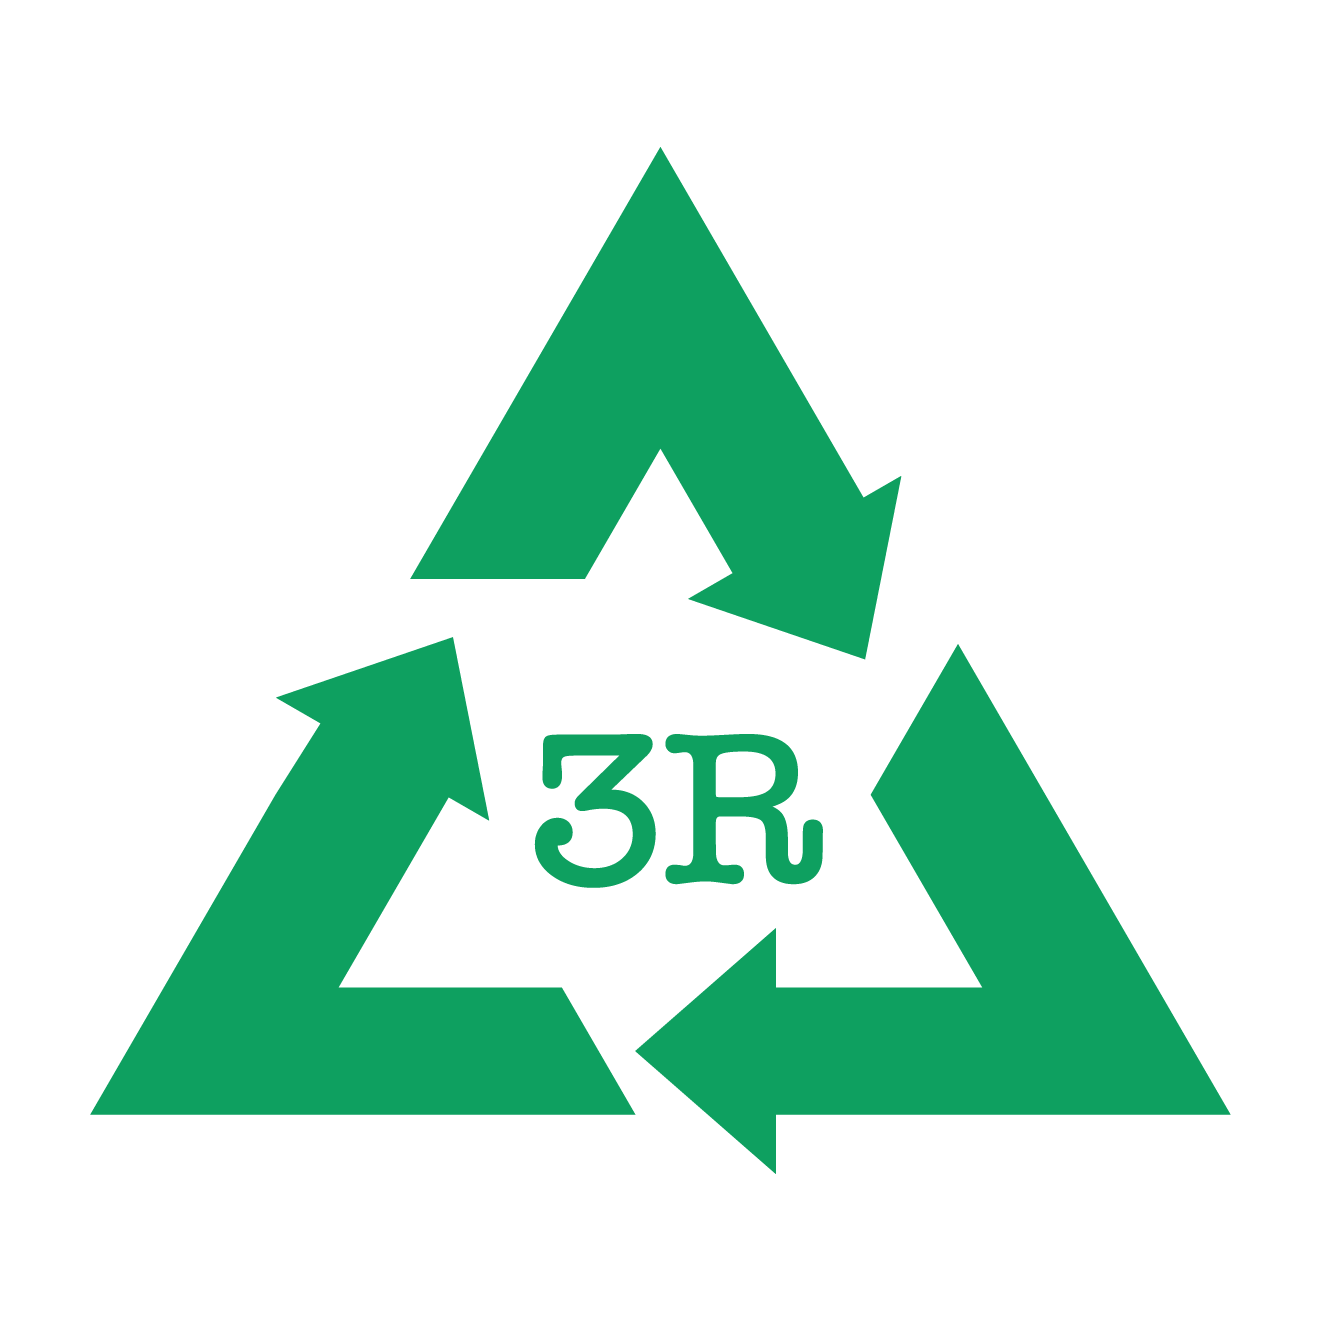 3r Reduceリデュース Reuseリユーズ Recycleリサイクル のマークのイラスト 商用フリー 無料 のイラスト素材なら イラストマンション